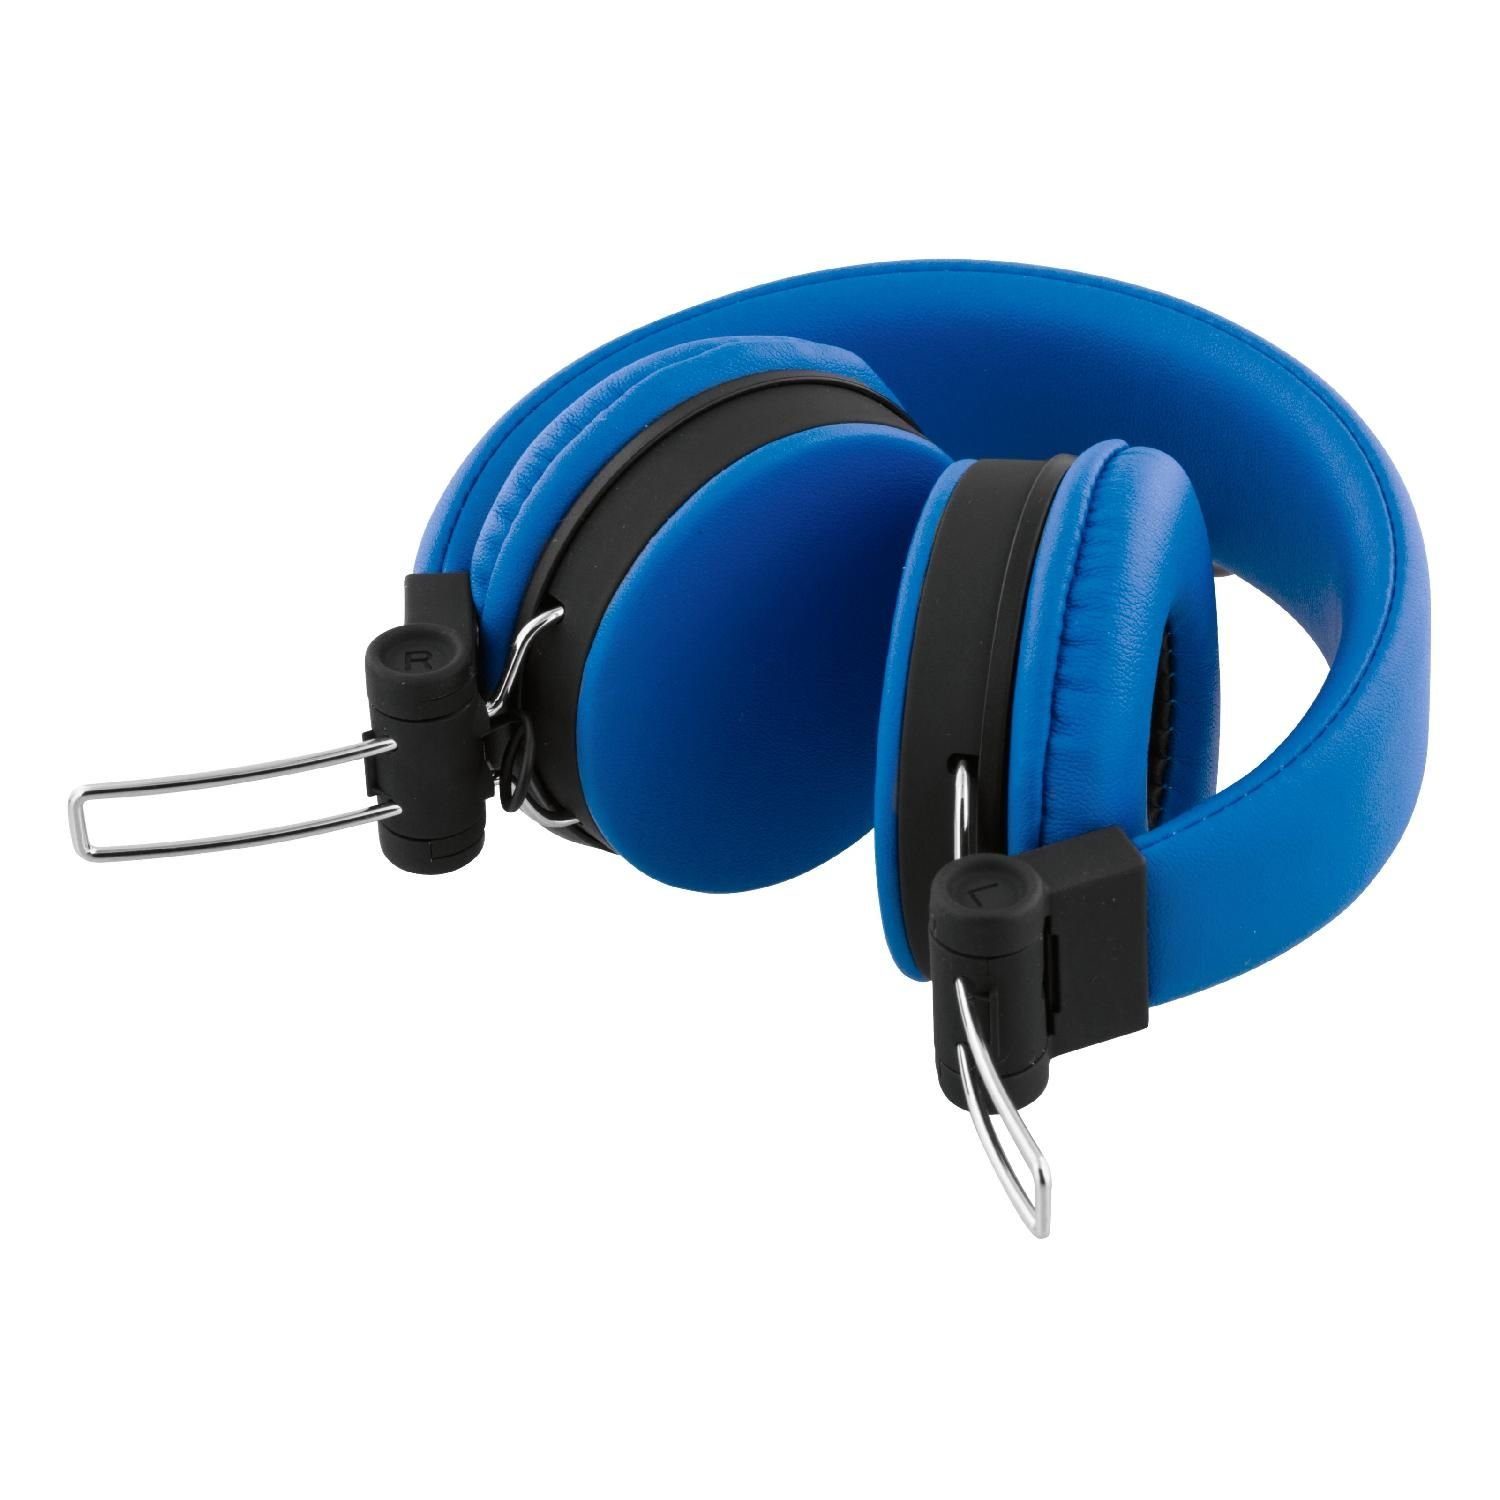 Herstellergarantie) Kabel Jahre Klinkenanschluss Headset, dunkelblau, faltbares 1,2m (integriertes 5 Mikrofon, Ohrpolster STREETZ Kopfhörer 3.5mm On-Ear-Kopfhörer inkl.